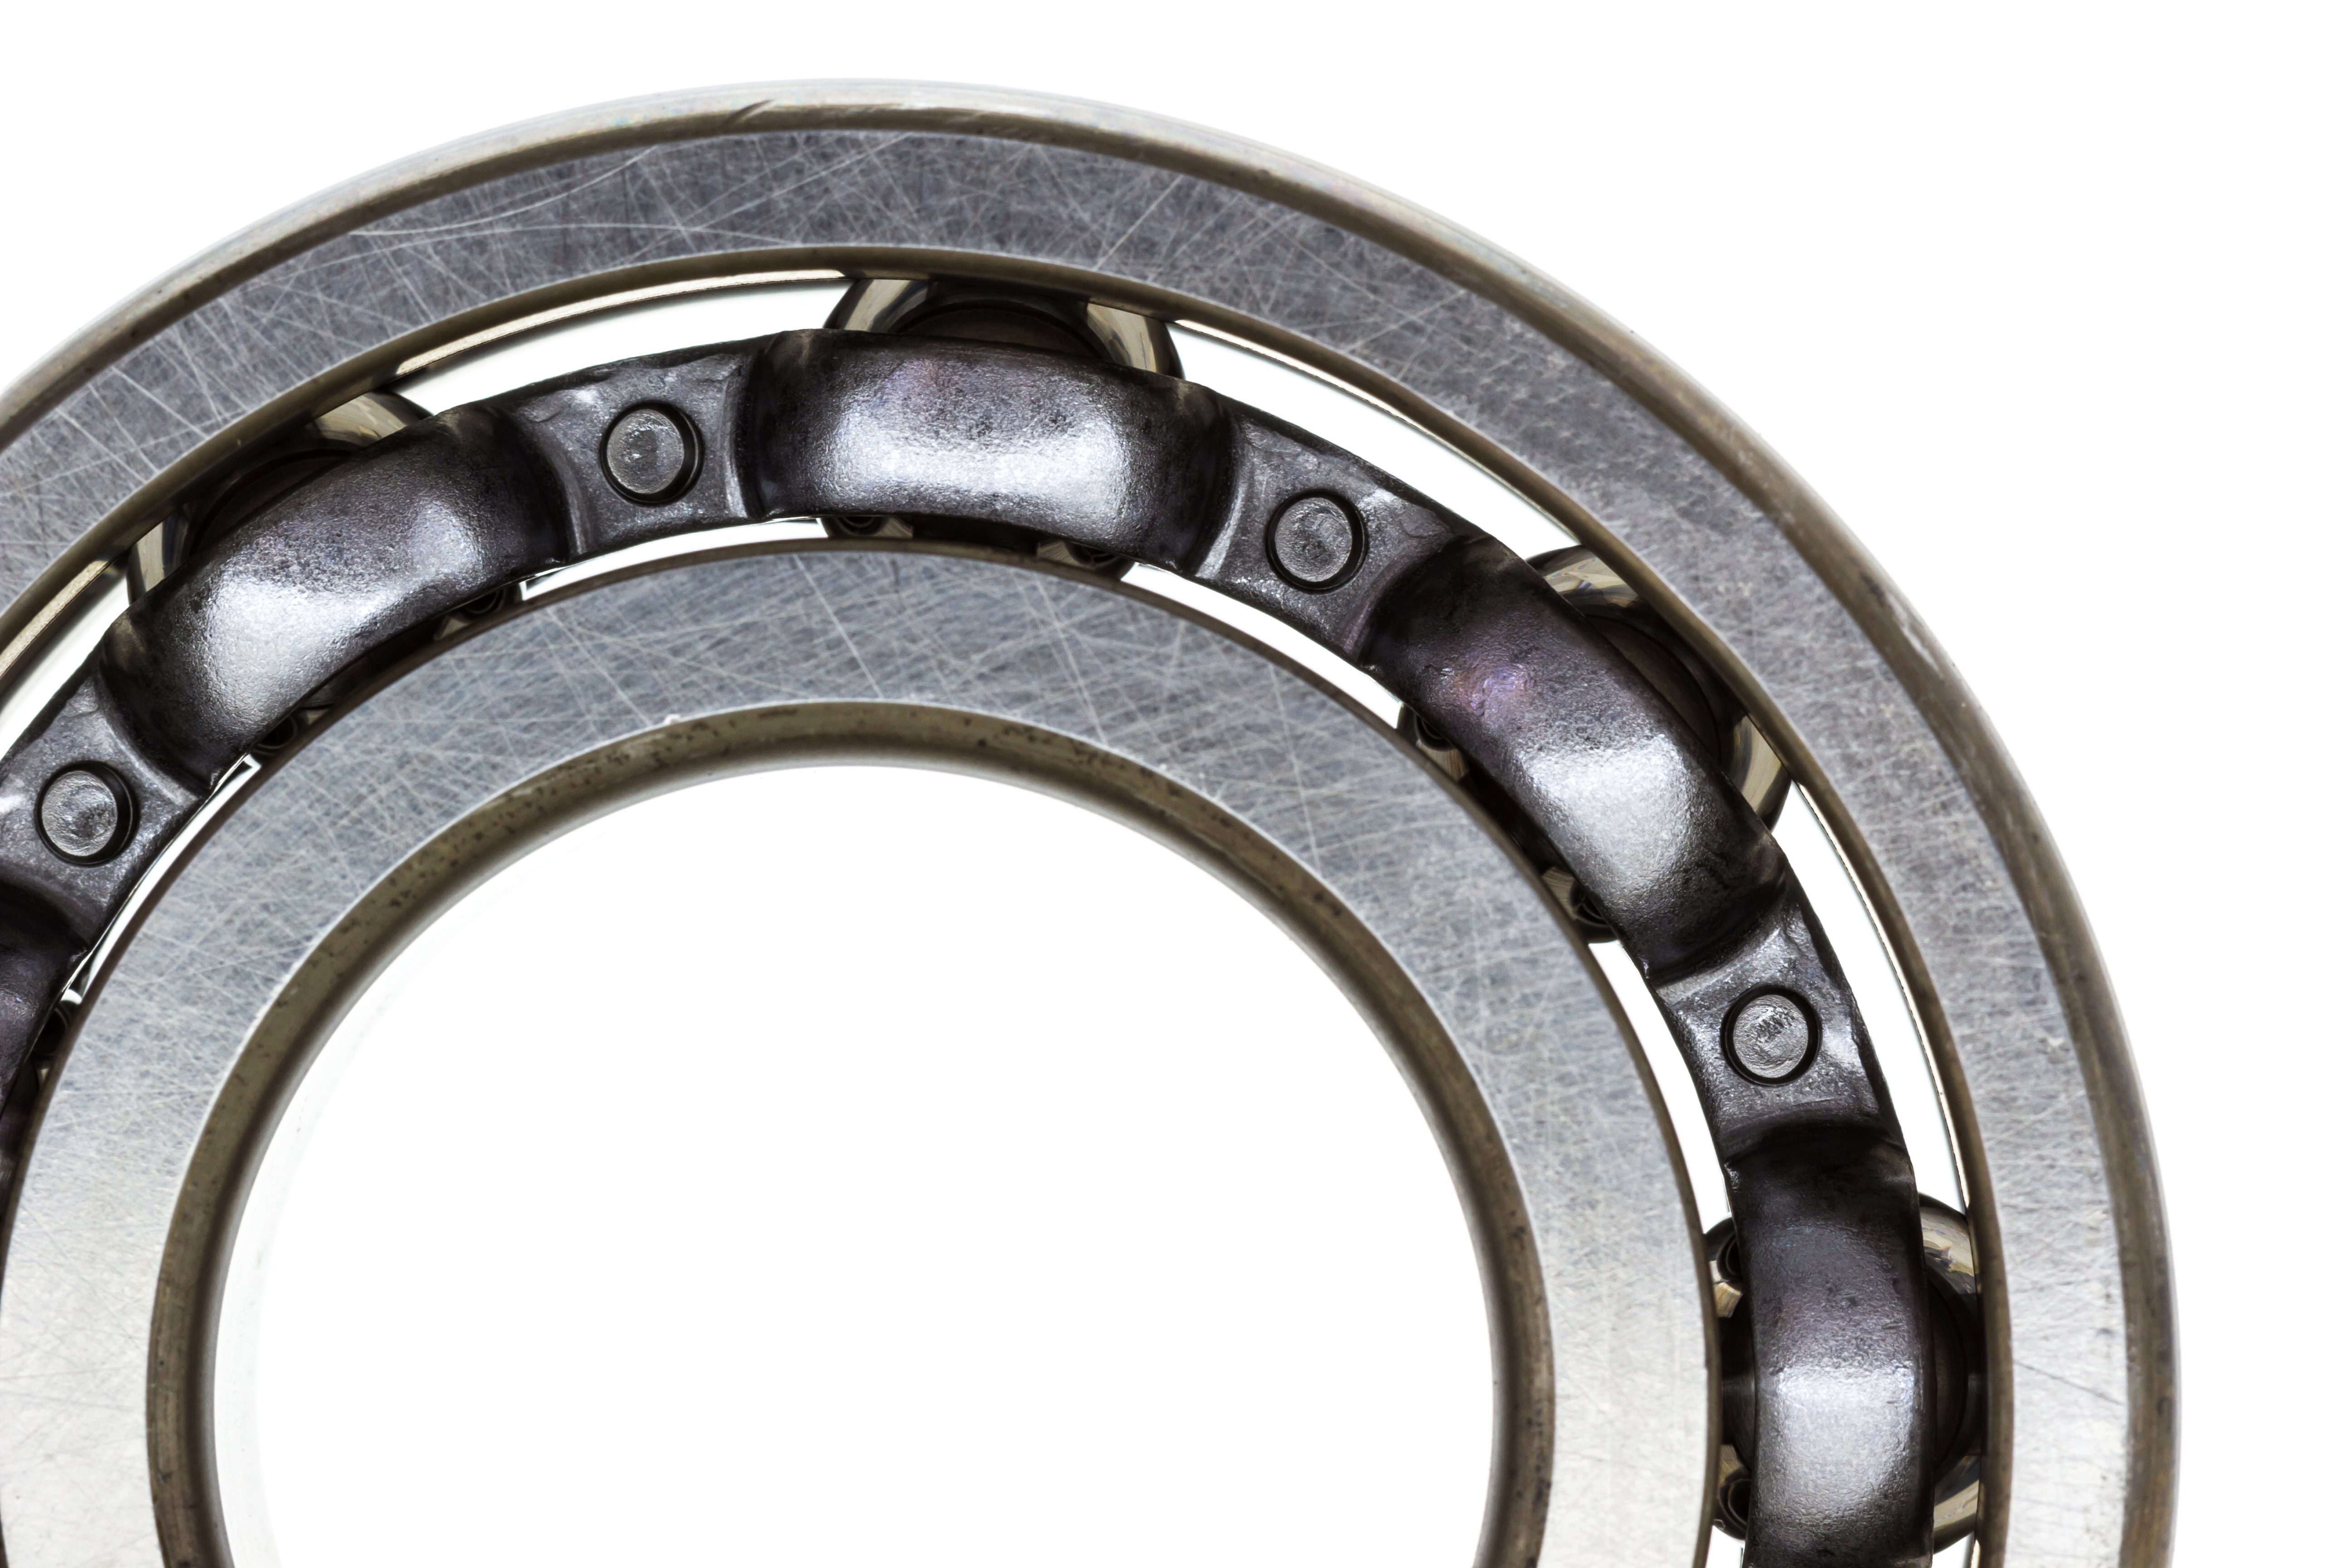 Macro steel ball bearing  isolated on white background